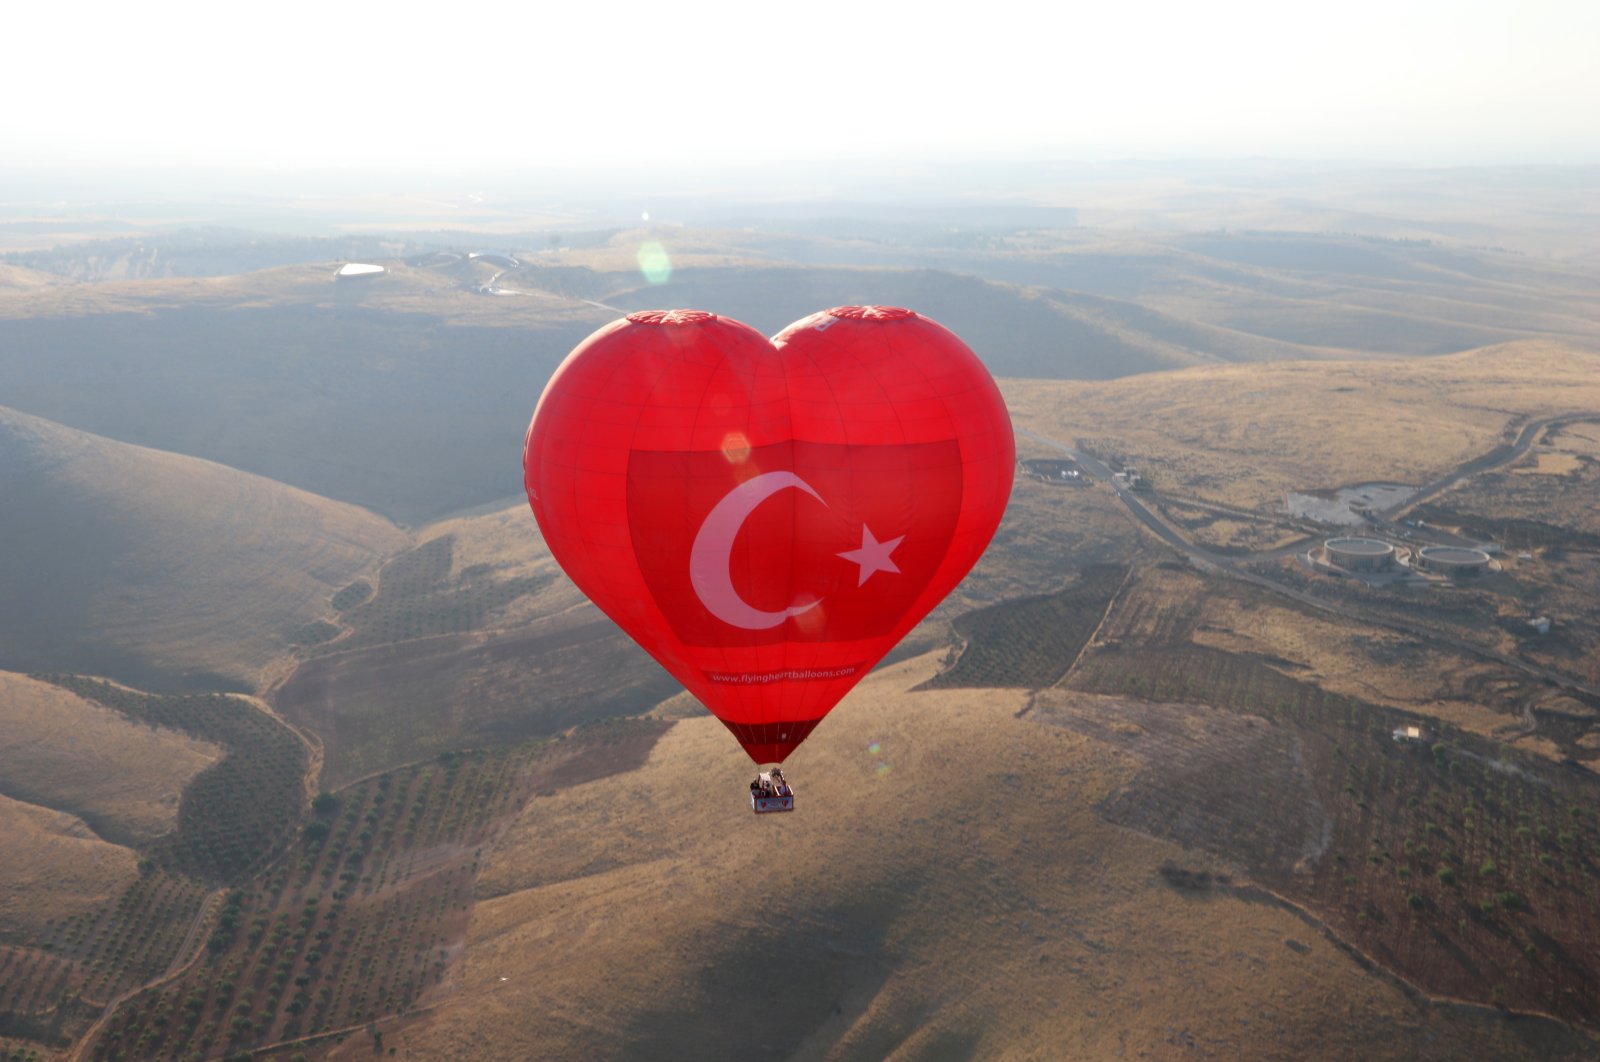 The first balloons of the season take off near the ancient site of Göbeklitepe in Şanlıurfa province, southeastern Turkey, July 12, 2021. (AA Photo)